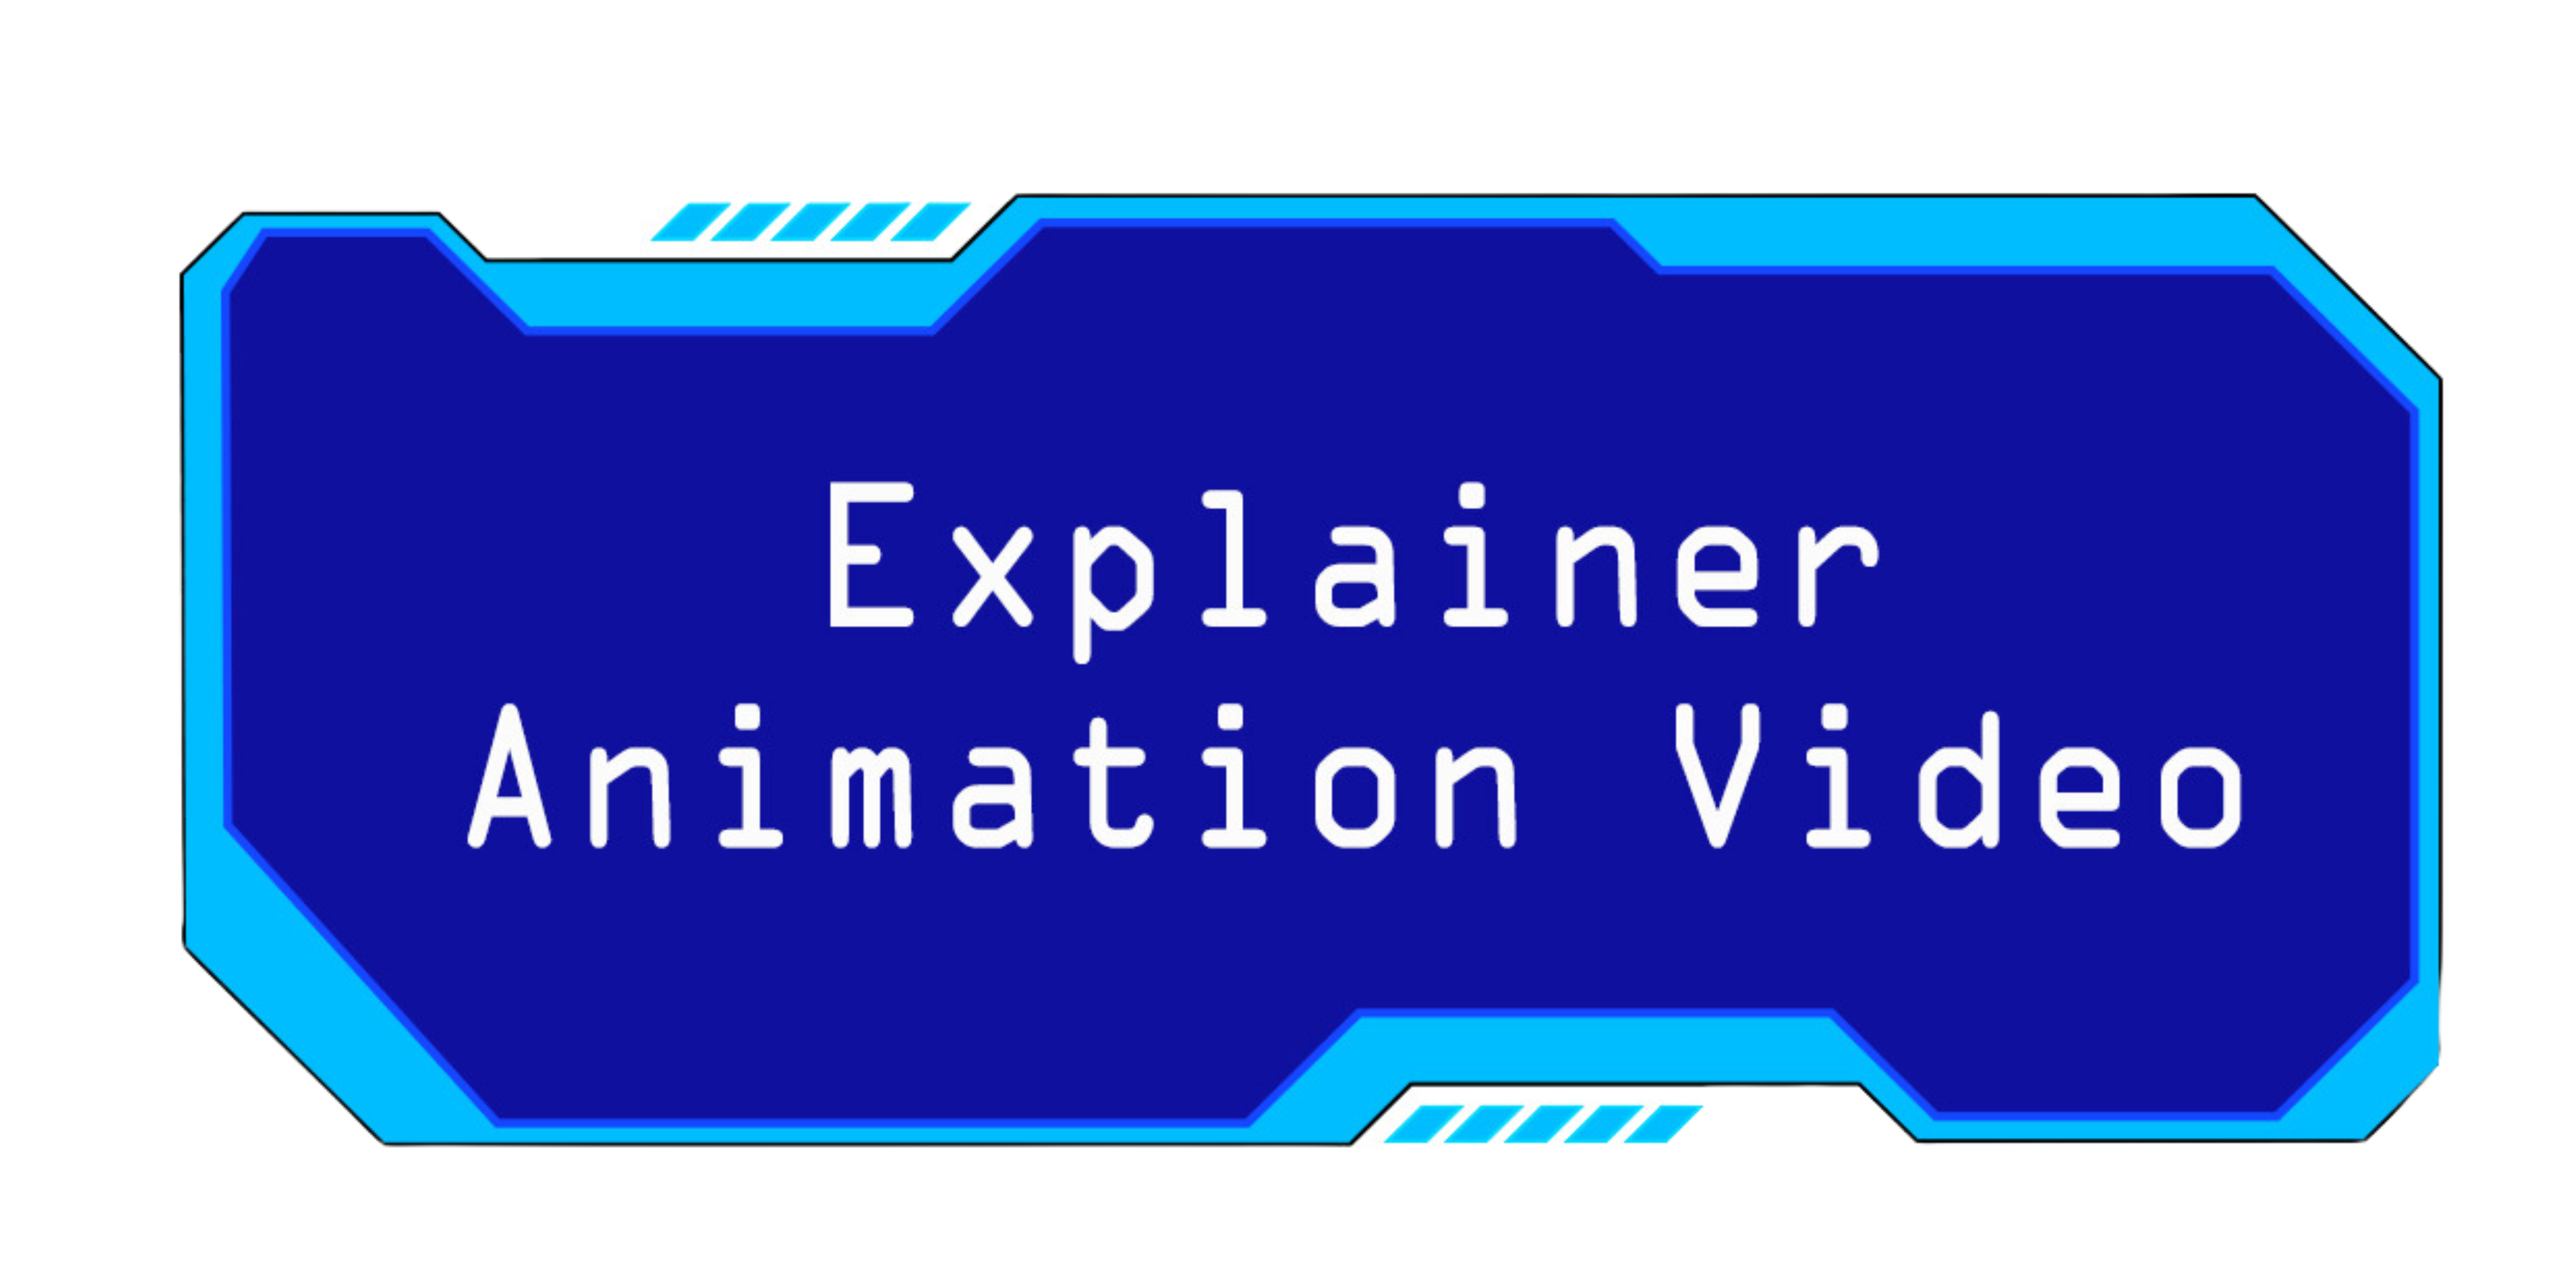 Explainer animation video